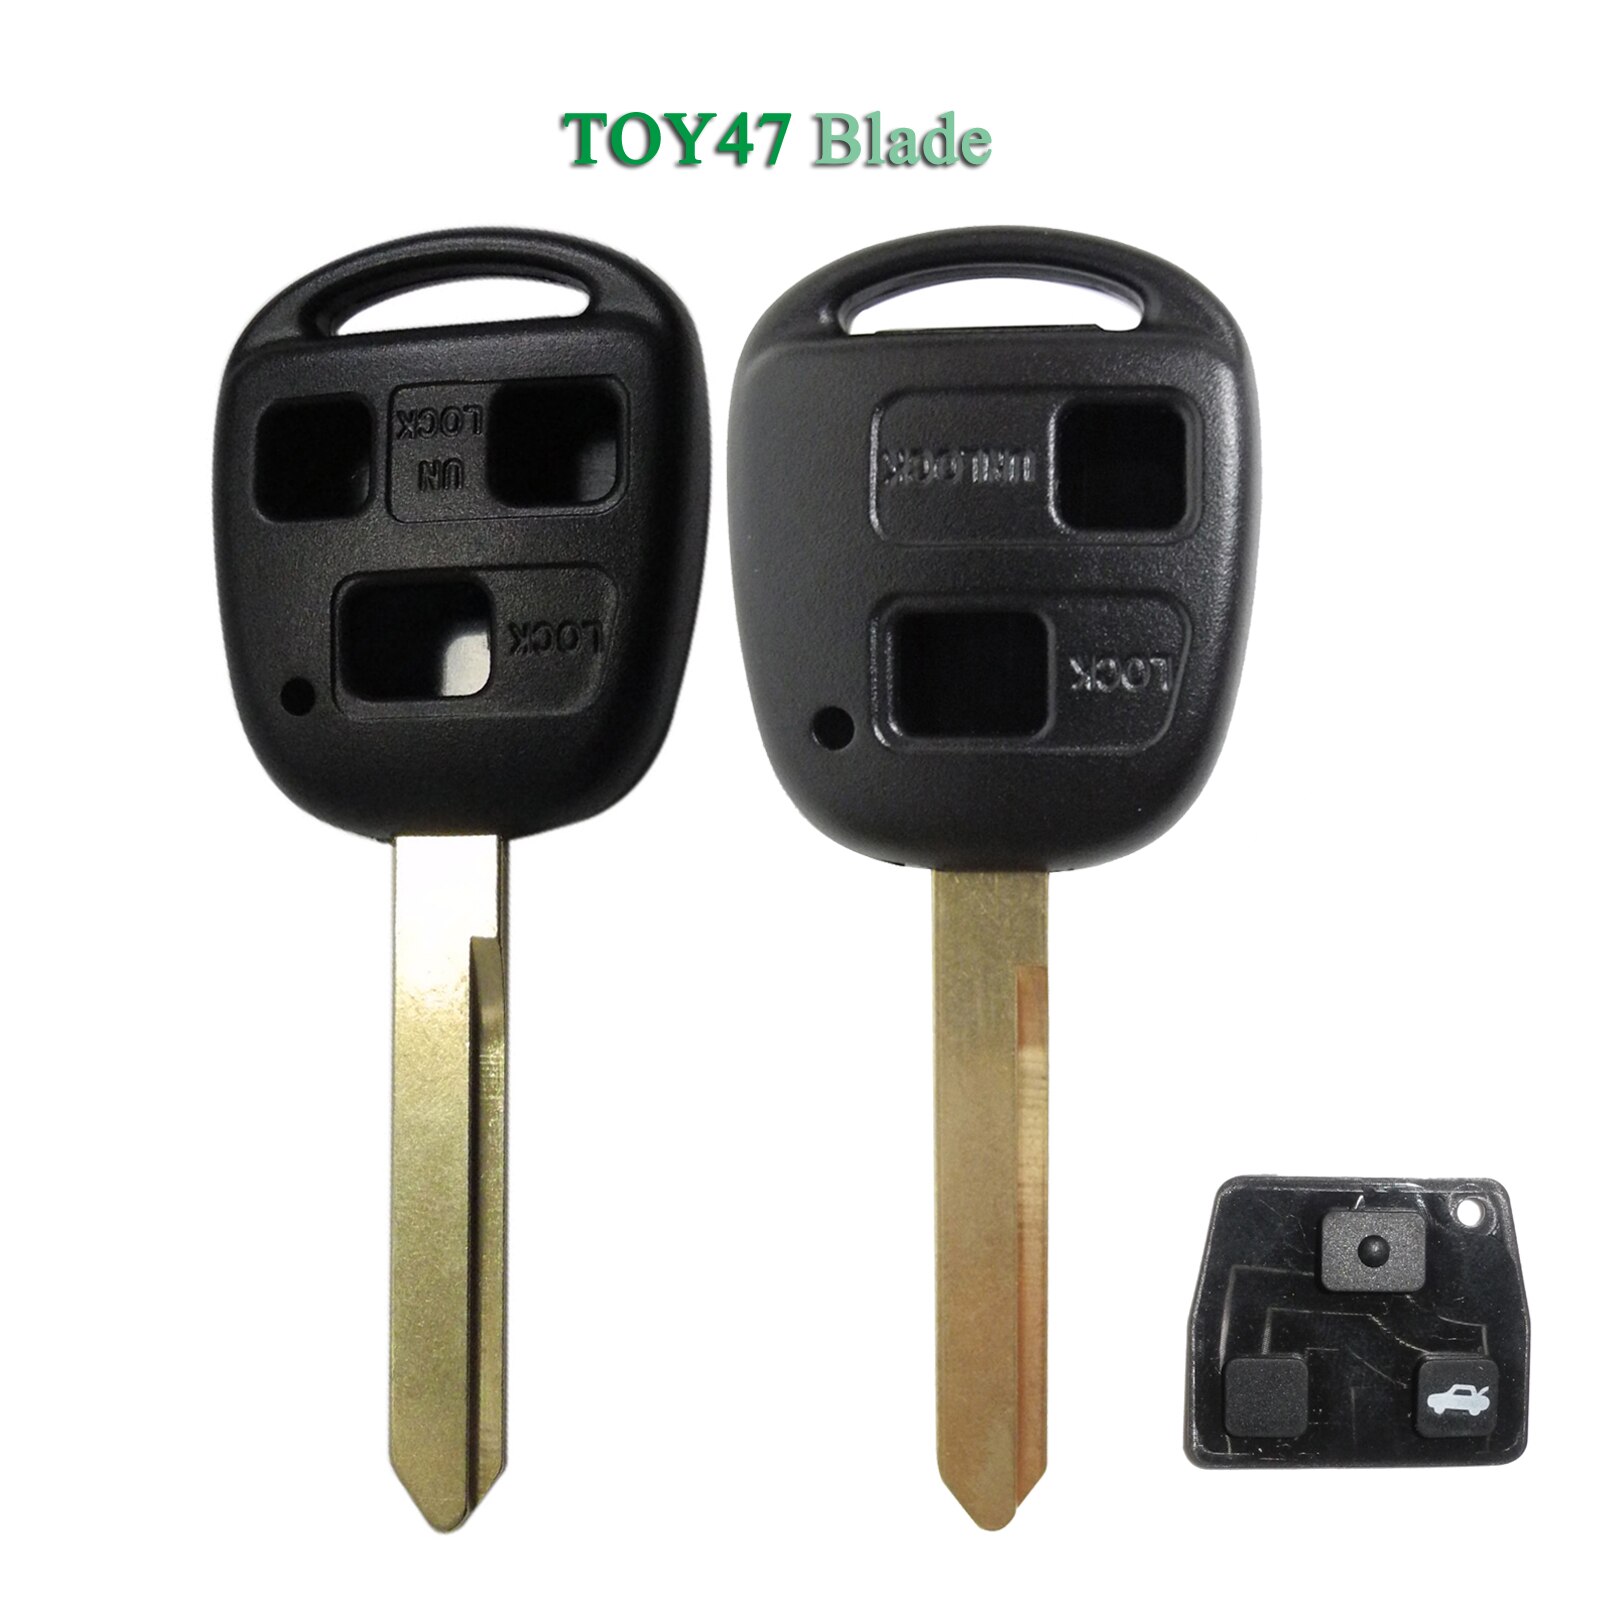 Bilchave 2/3 Knoppen Auto Afstandsbediening Auto Sleutel Shell Fob Voor Toyota Yaris Avensis Key Case Met Toy47 Ongecensureerd Blade Vervanging